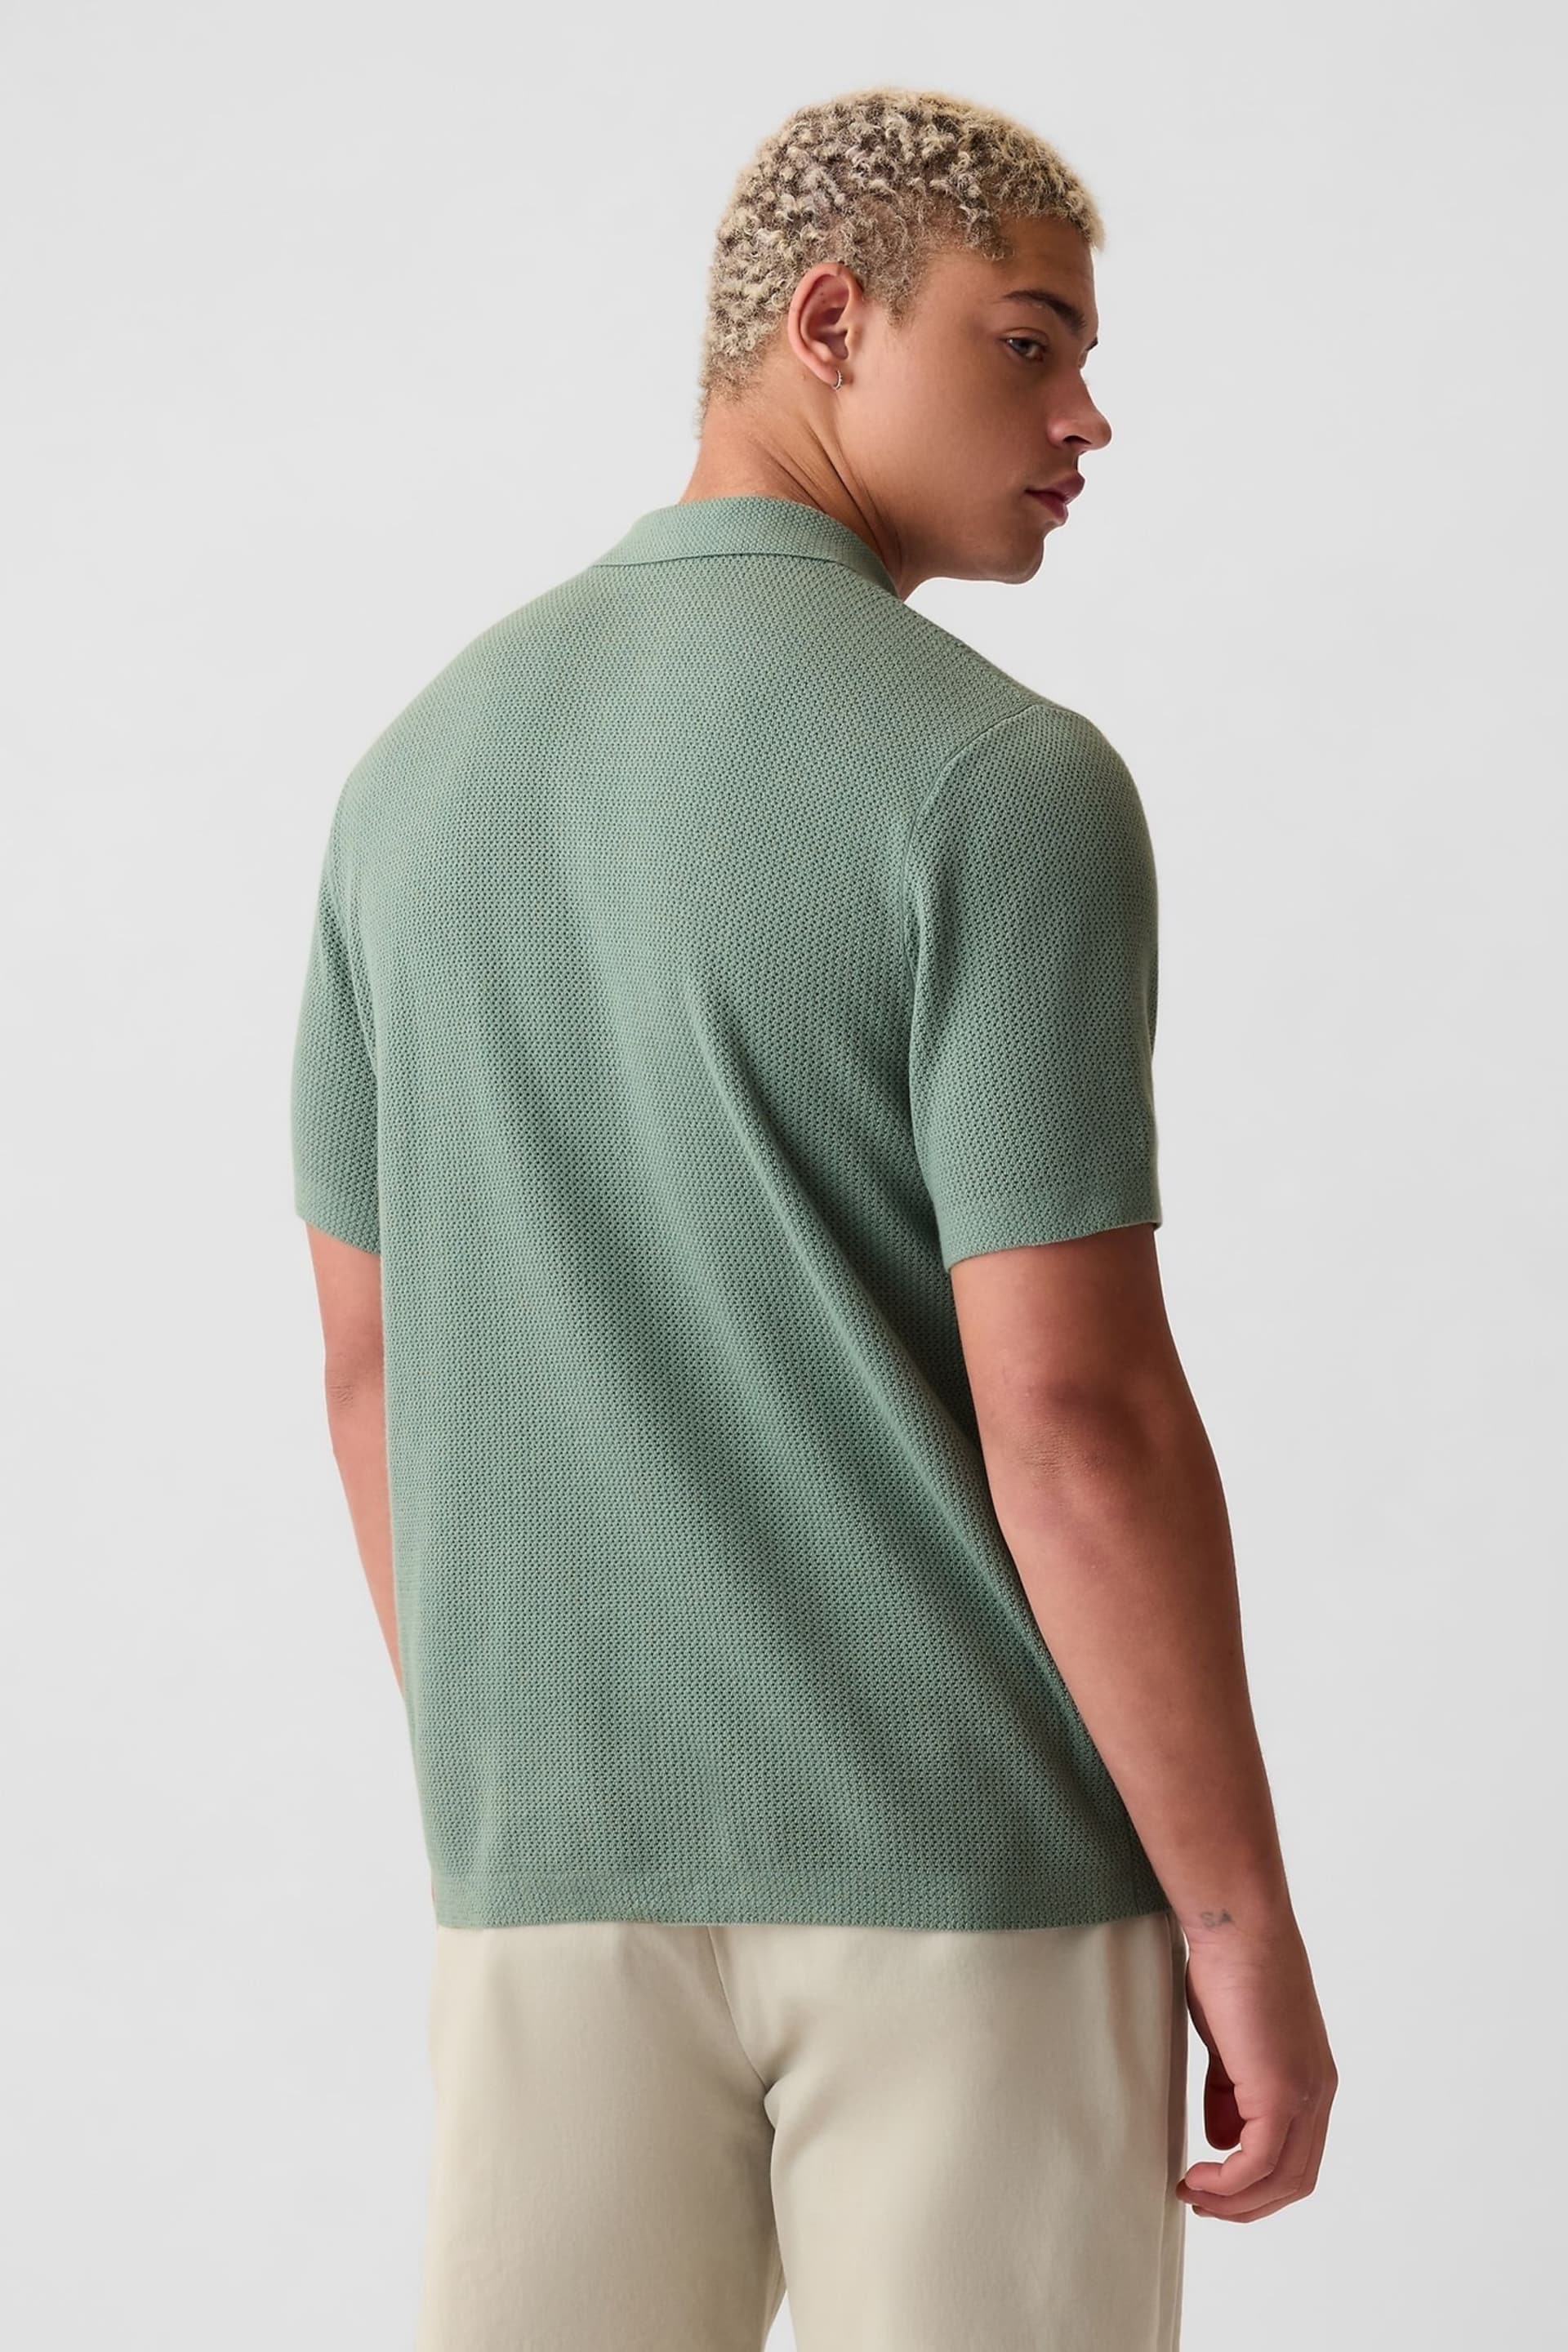 Gap Green Cotton Textured Short Sleeve Polo Shirt - Image 2 of 4